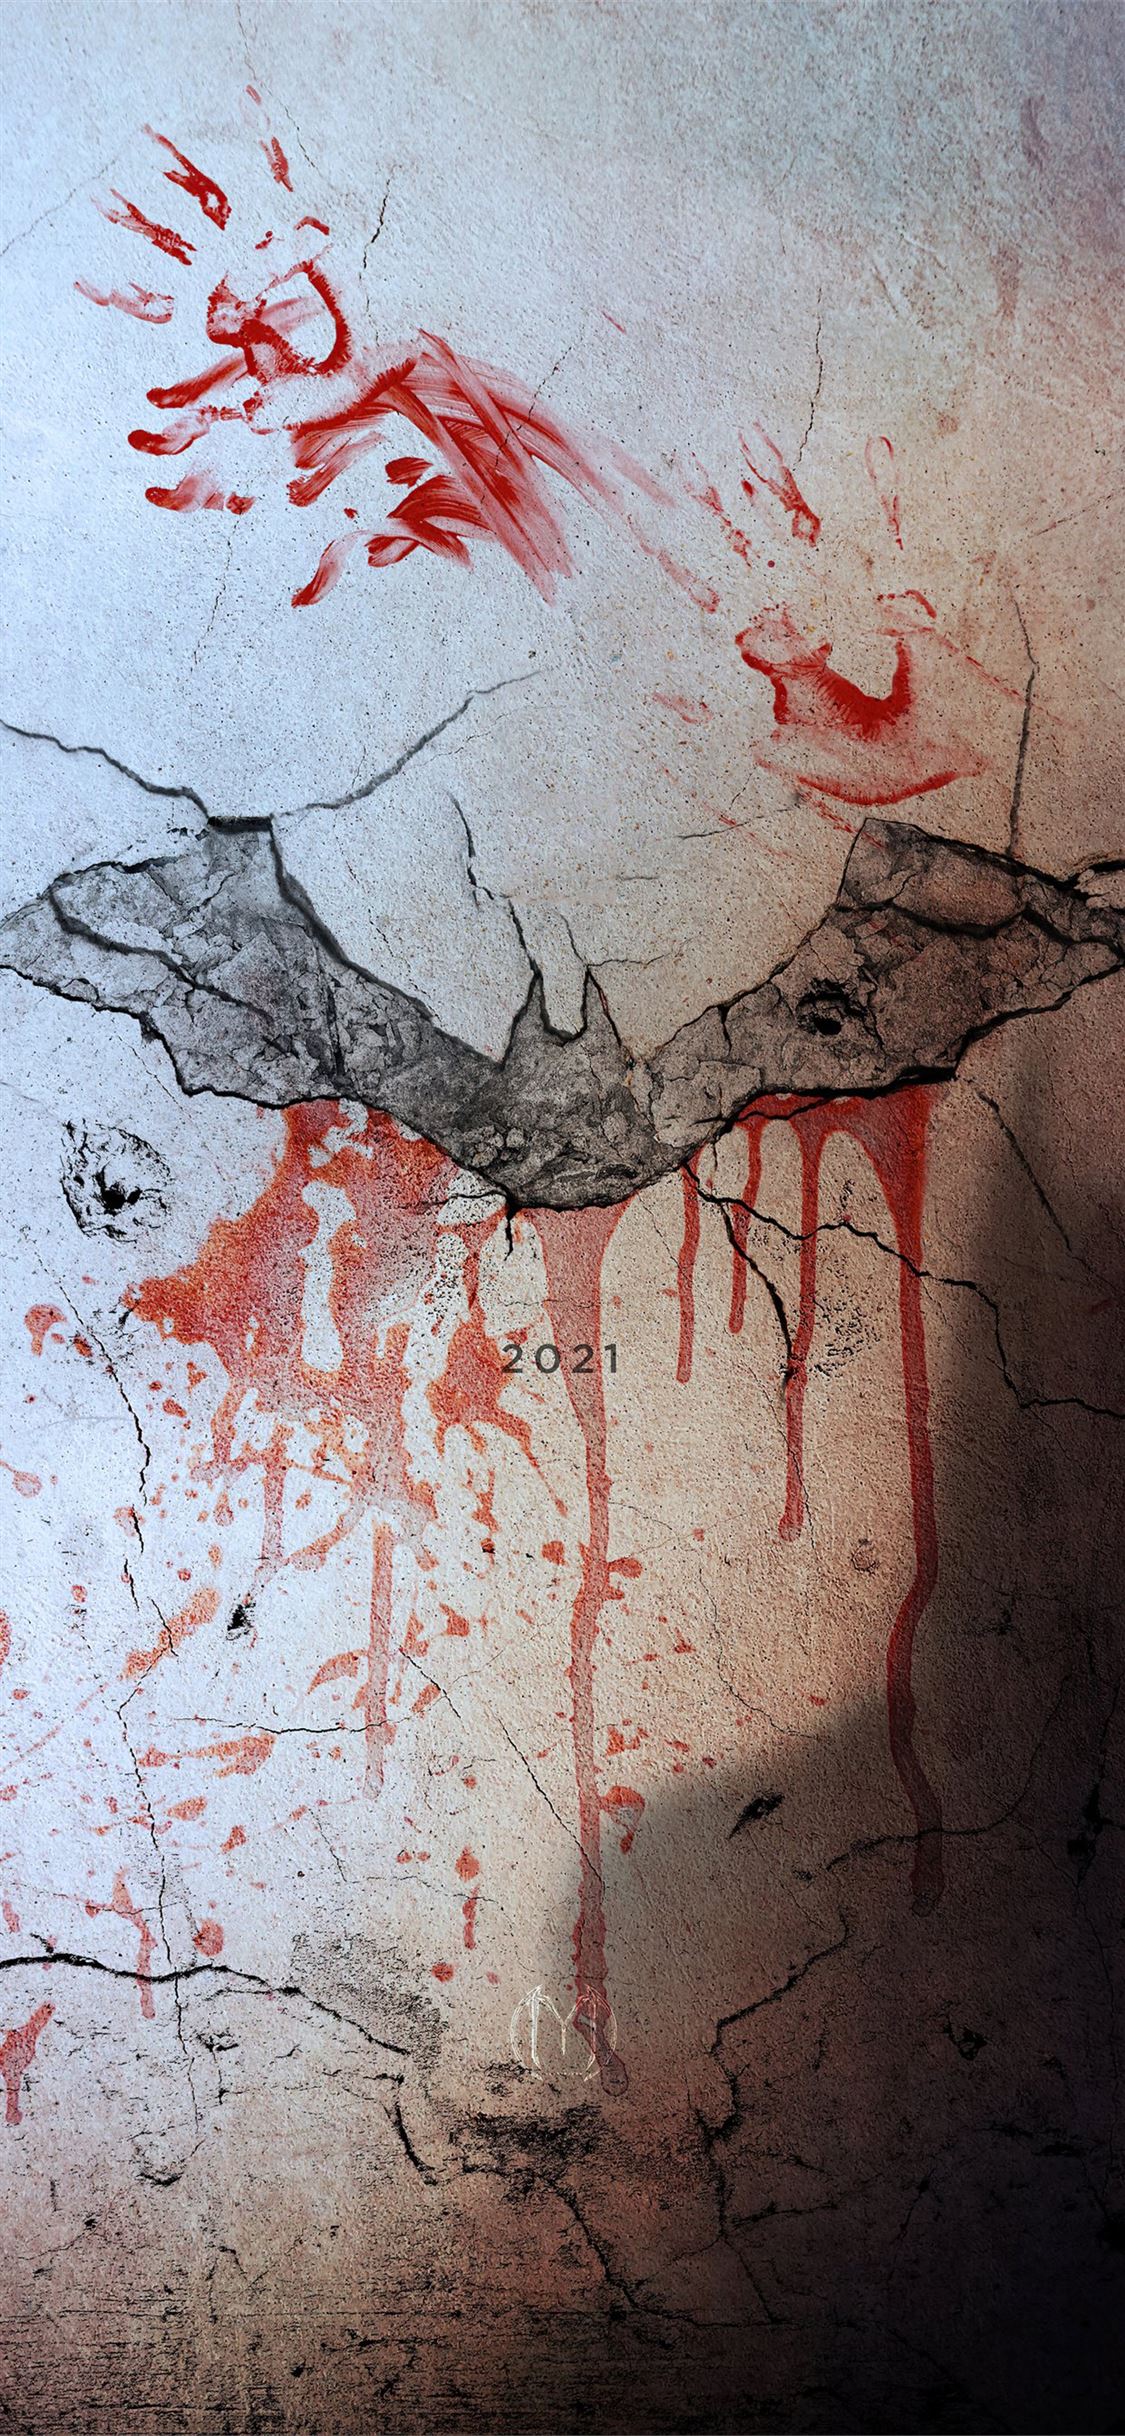 the batman 2021 logo iPhone X Wallpaper Free Download